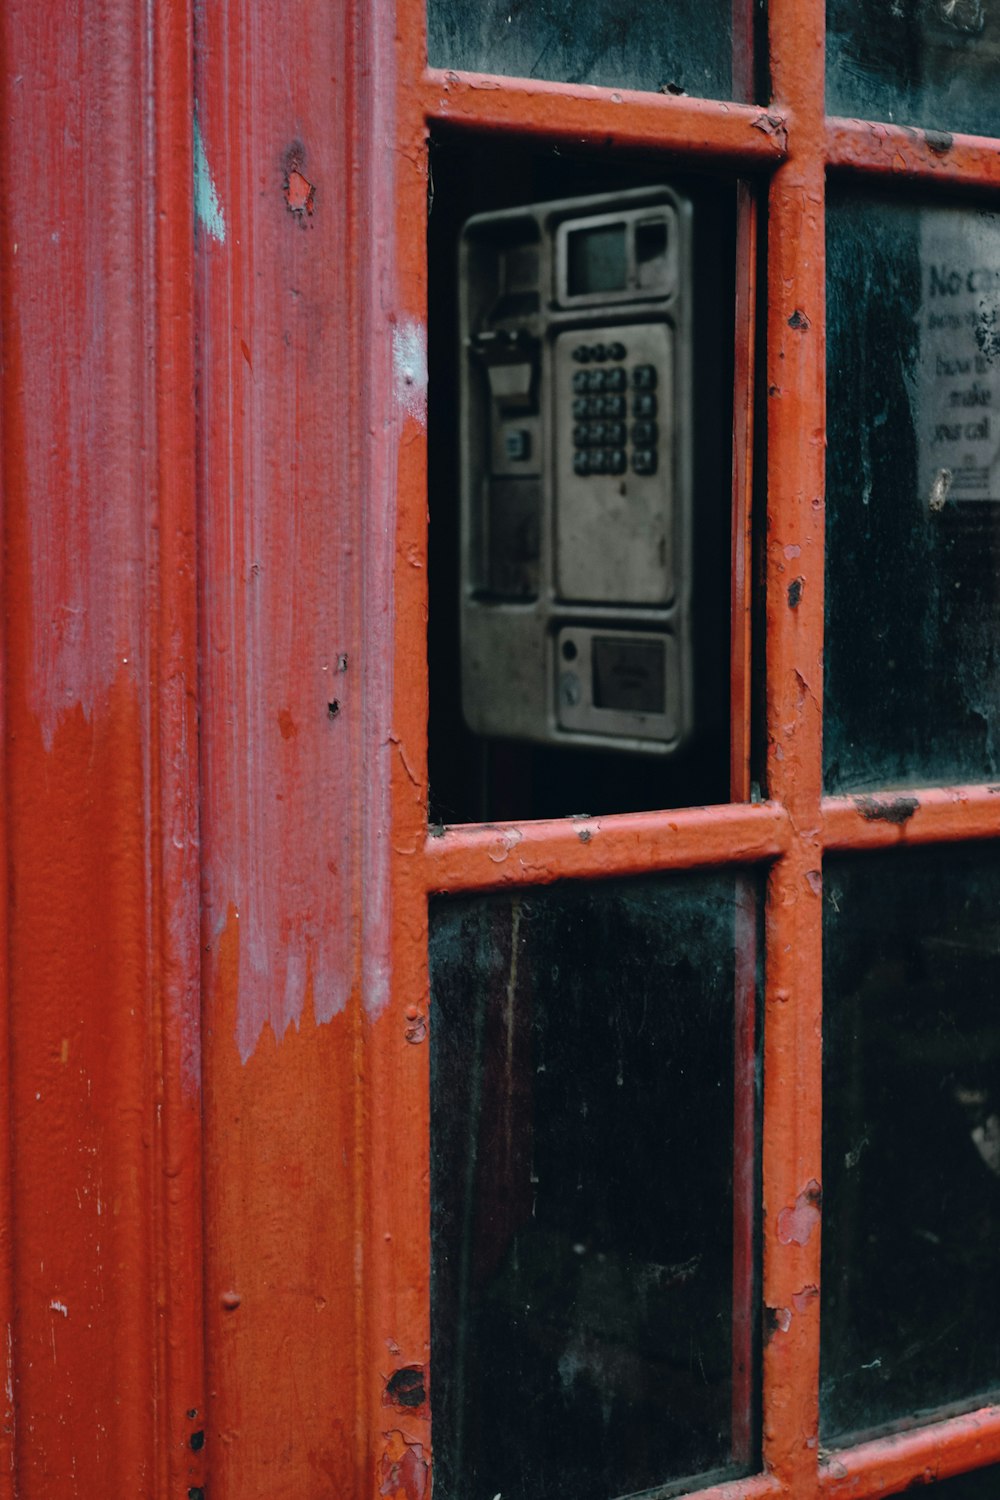 black telephone booth on red wooden door